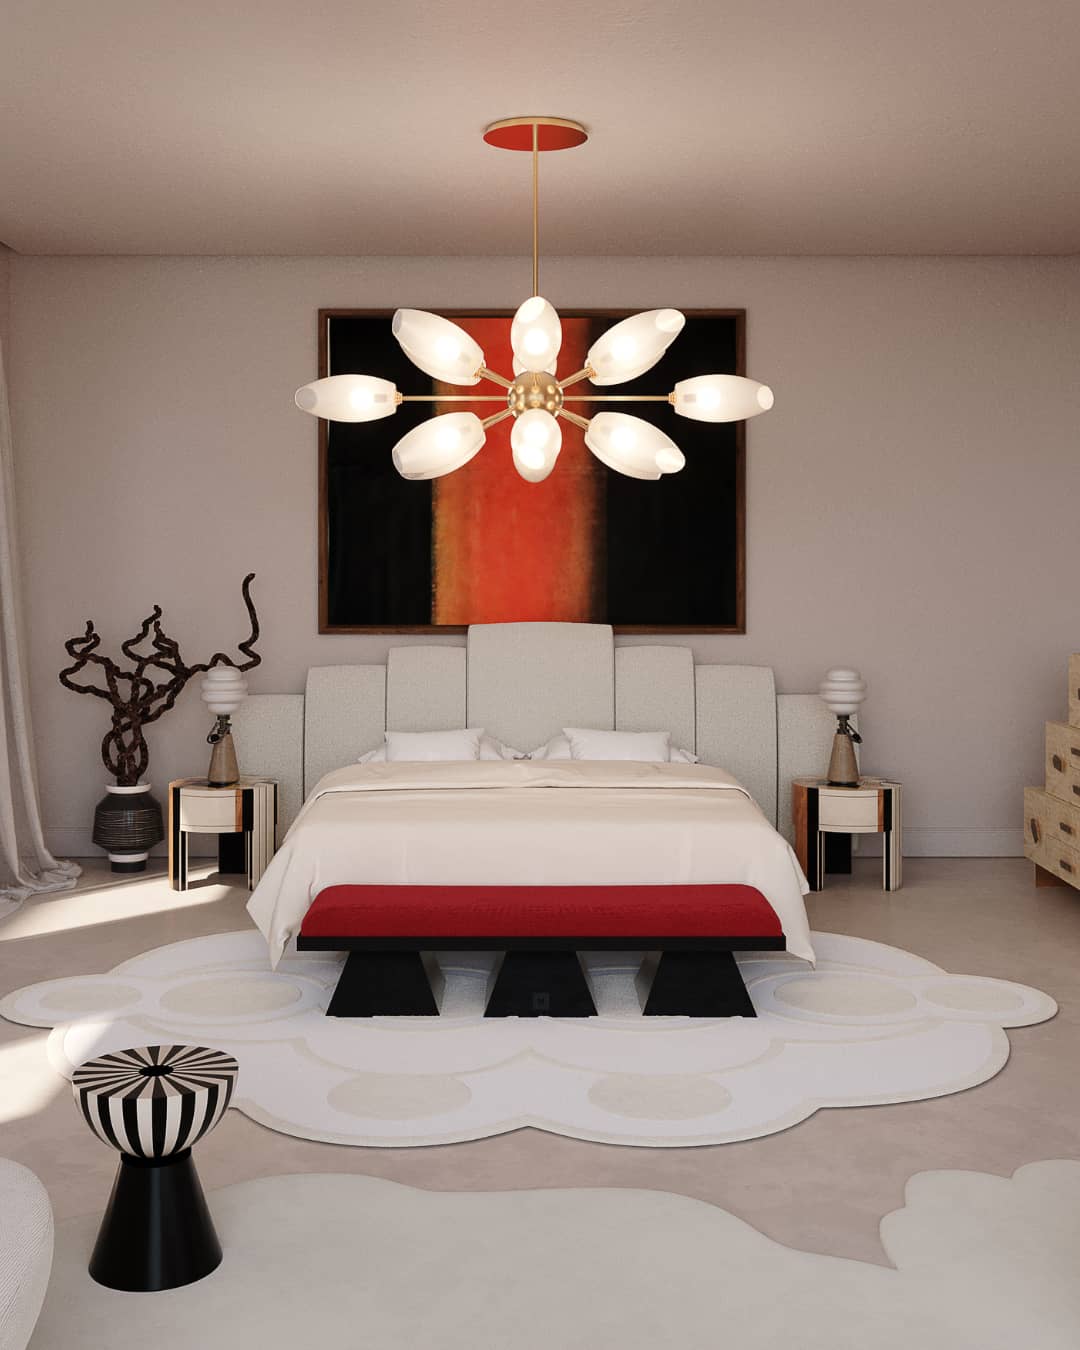 Unique furniture design for art deco or mid-century modern bedroom decor by HOMMÉS Studio